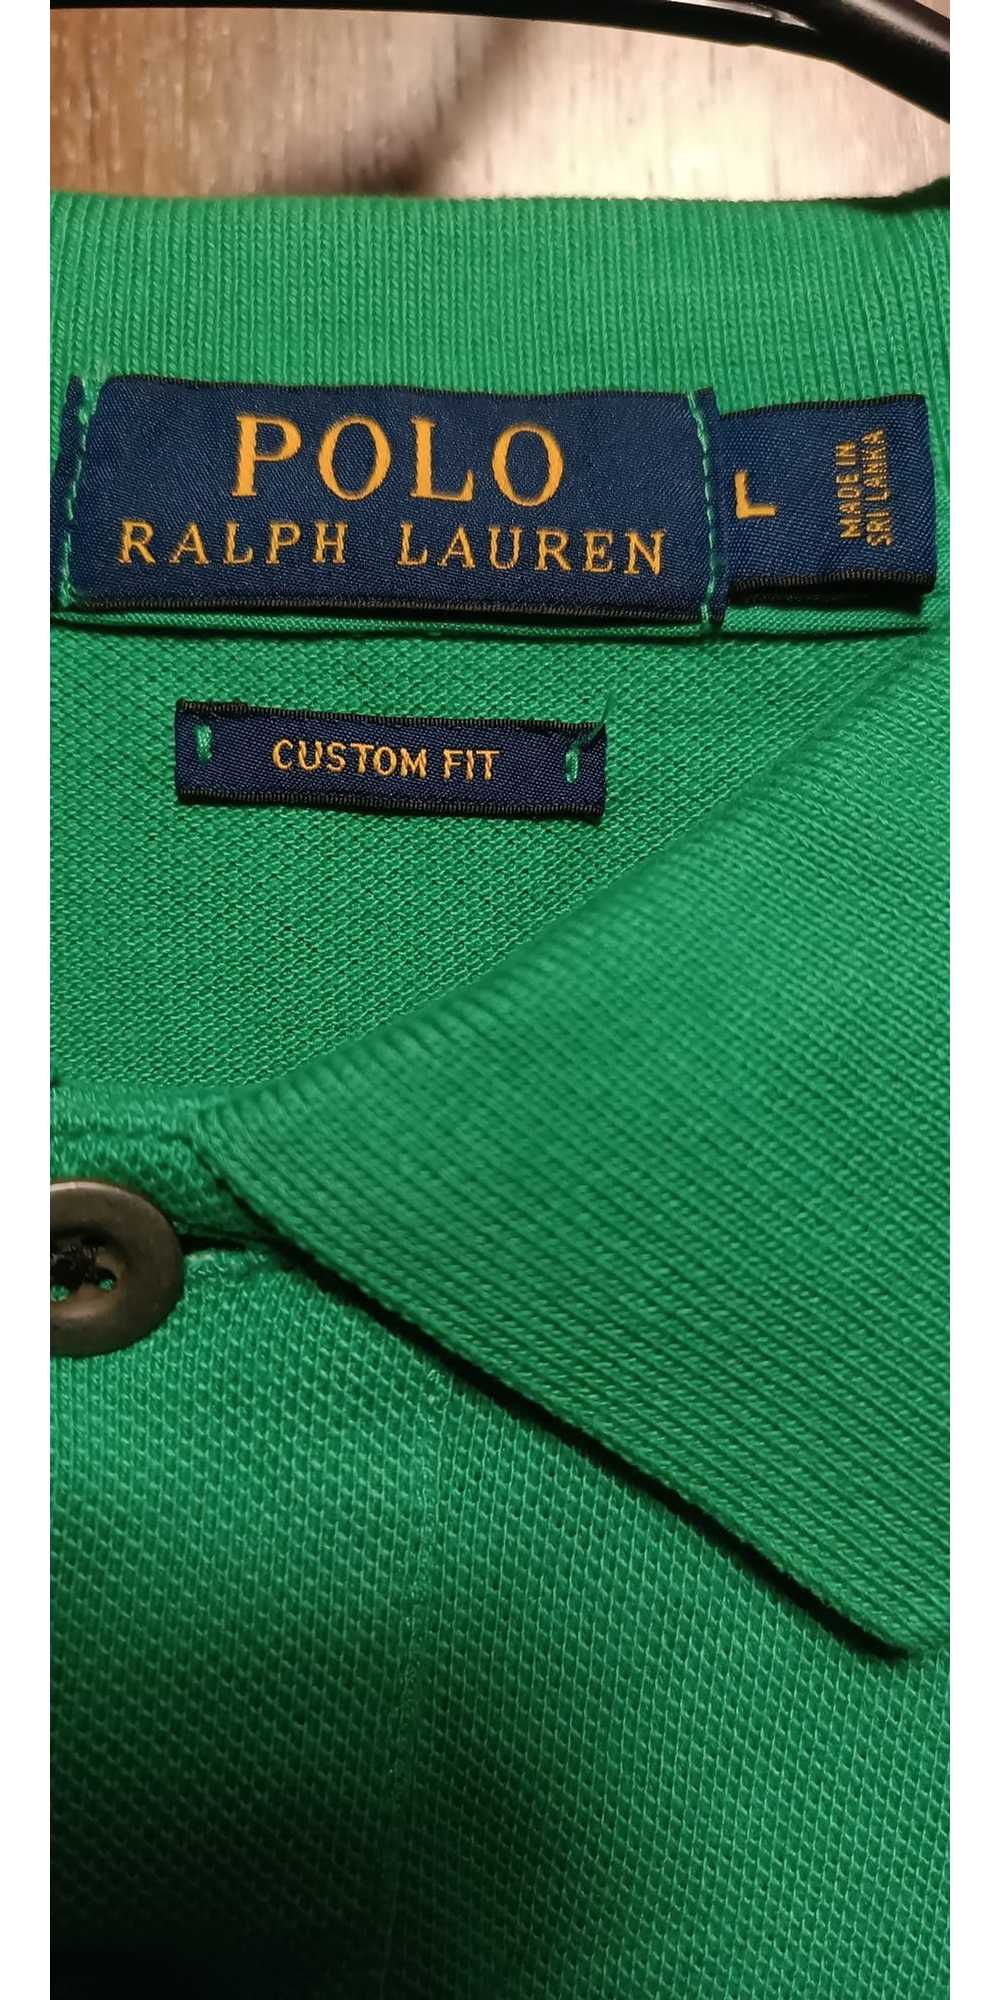 Polo Ralph Lauren Polo by Polo Ralph Lauren - image 4